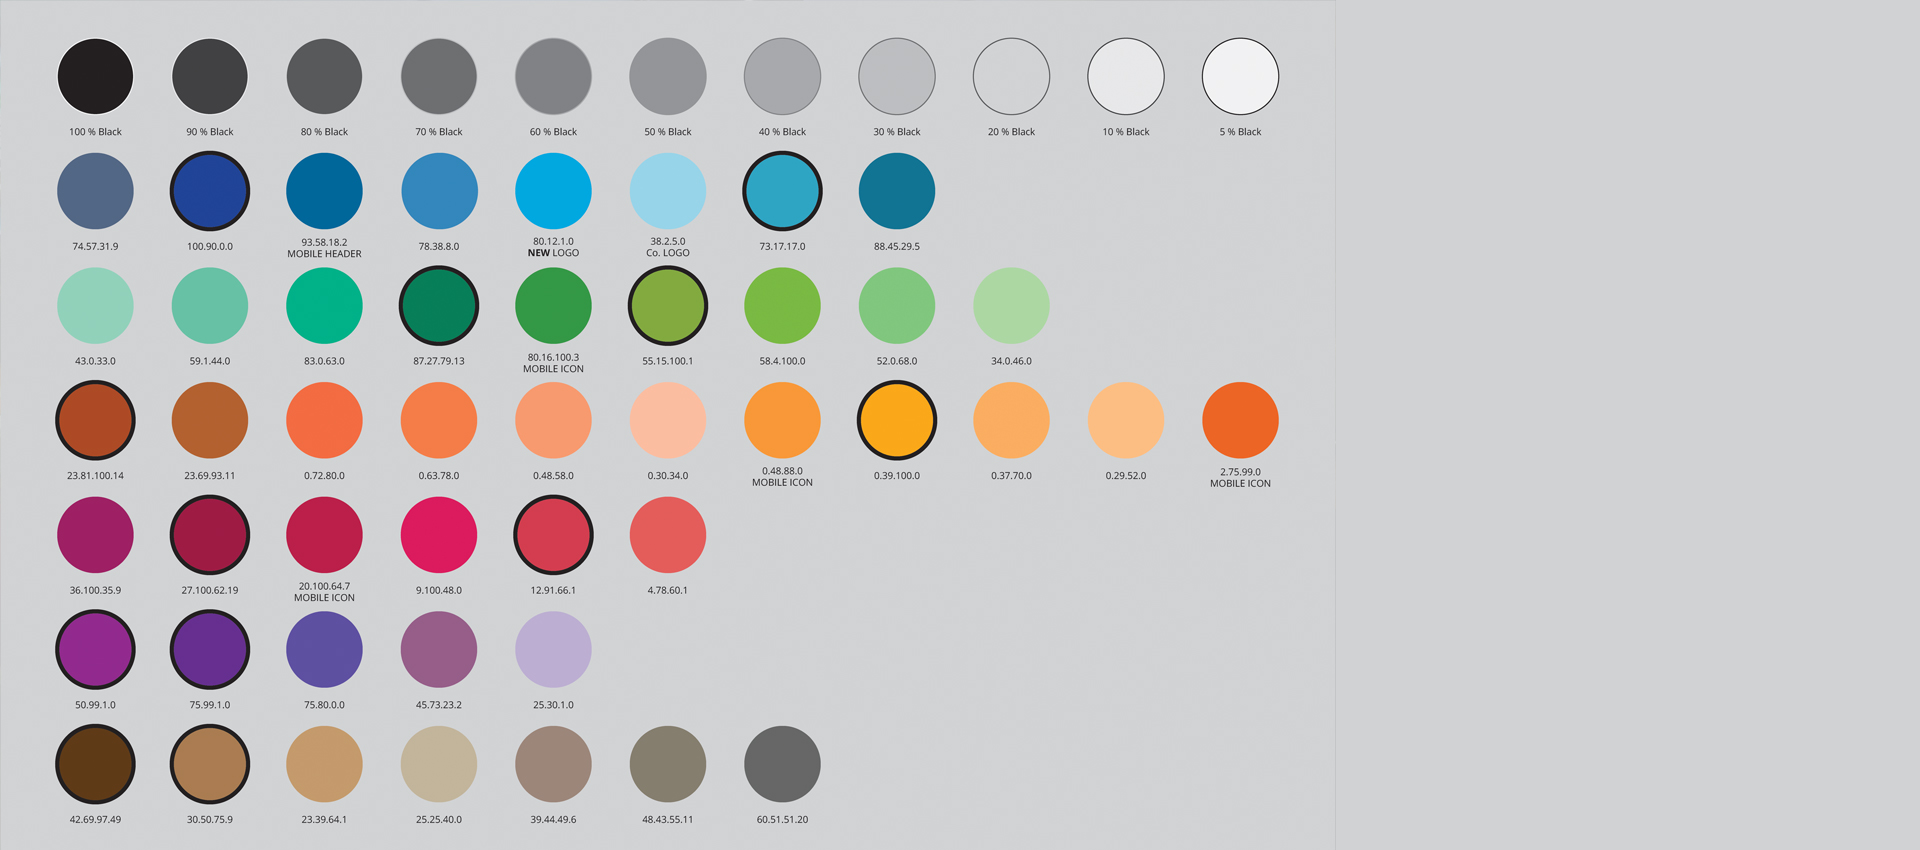 UXUI should include a color study